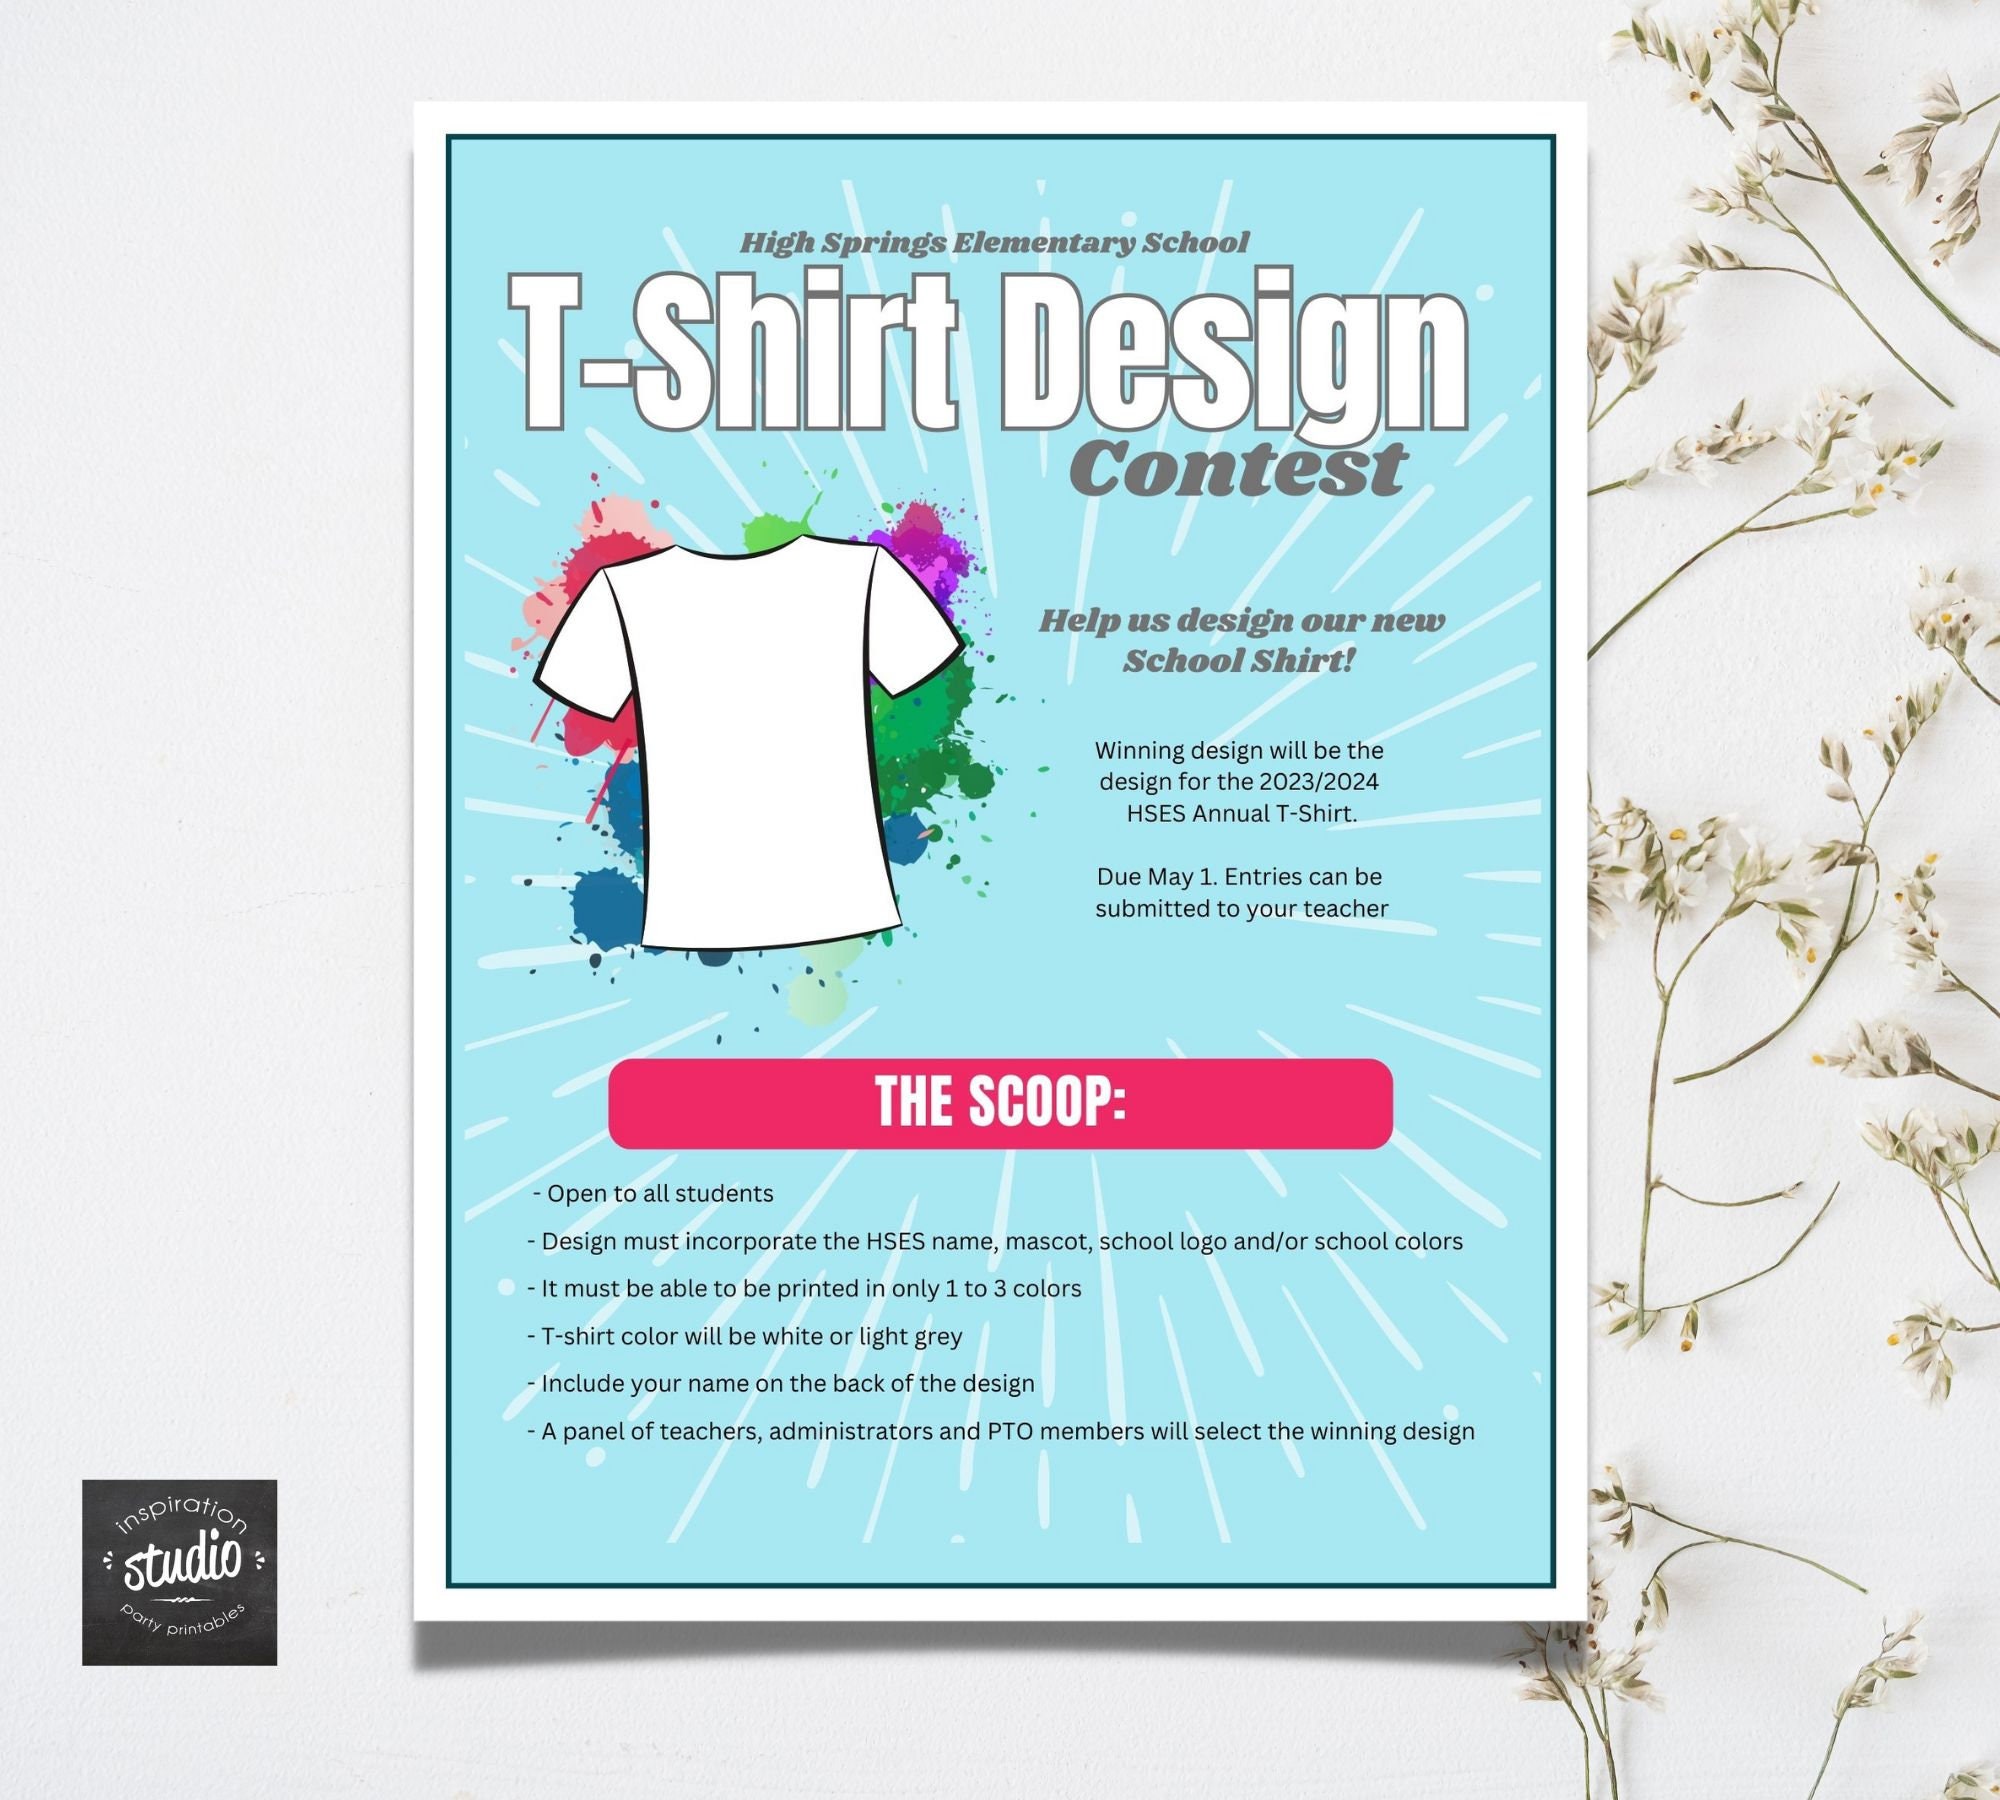 T shirt design contest flyer Vectors & Illustrations for Free